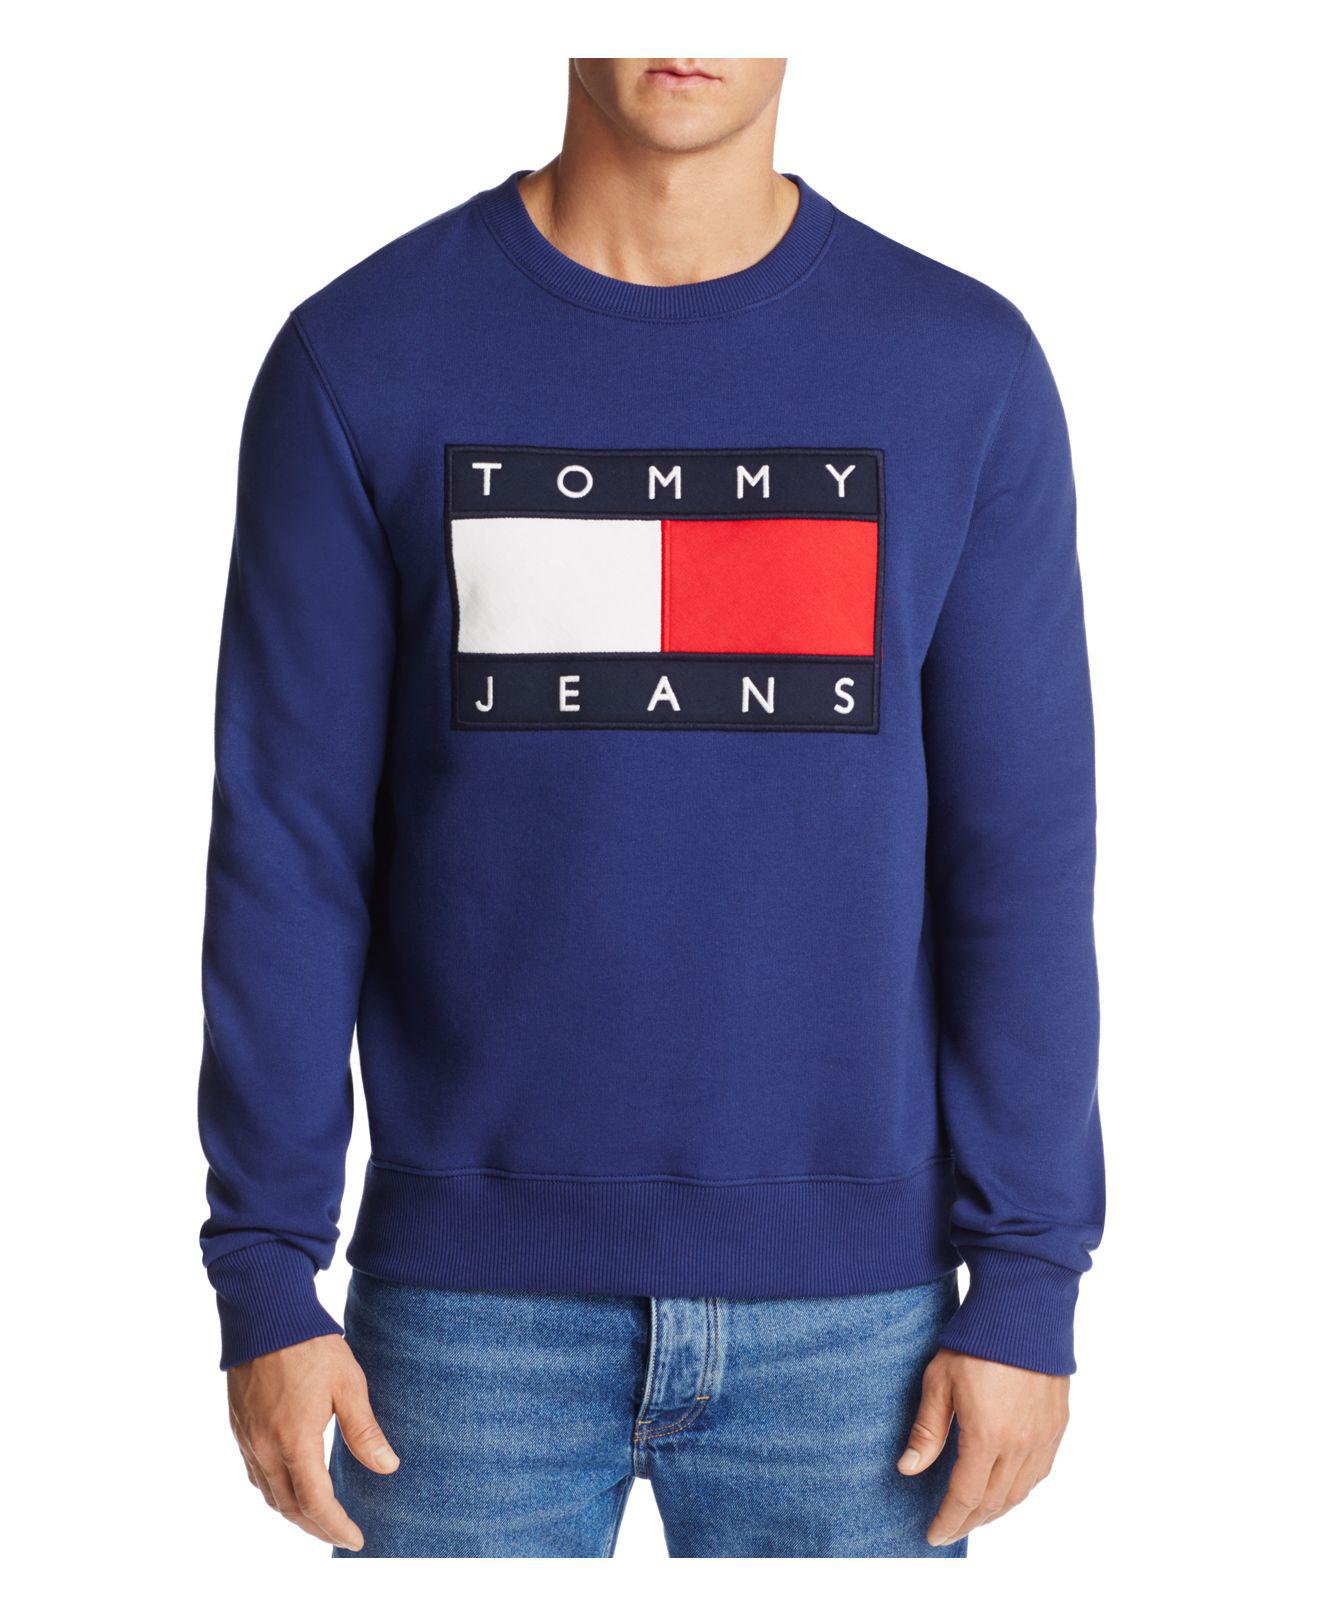 Tommy Hilfiger Graphic Logo Sweatshirt in Blue for Men - Lyst